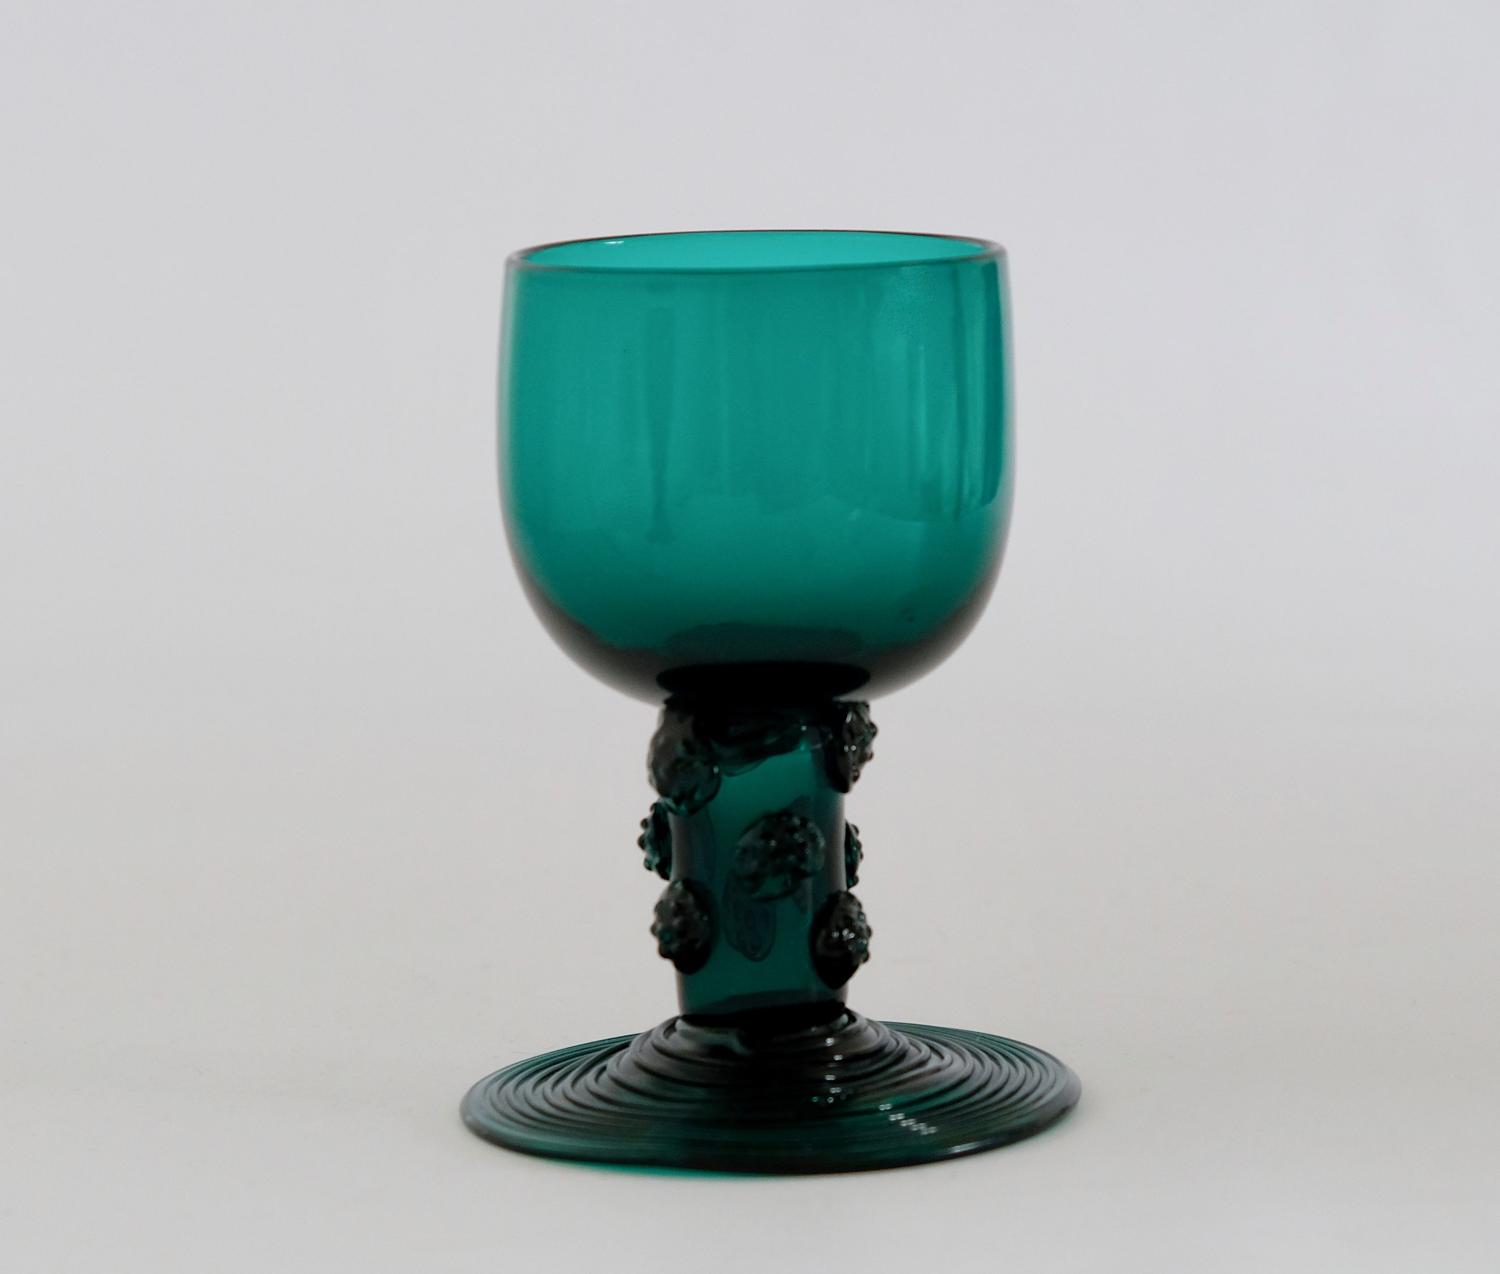 Green wine glass C1830